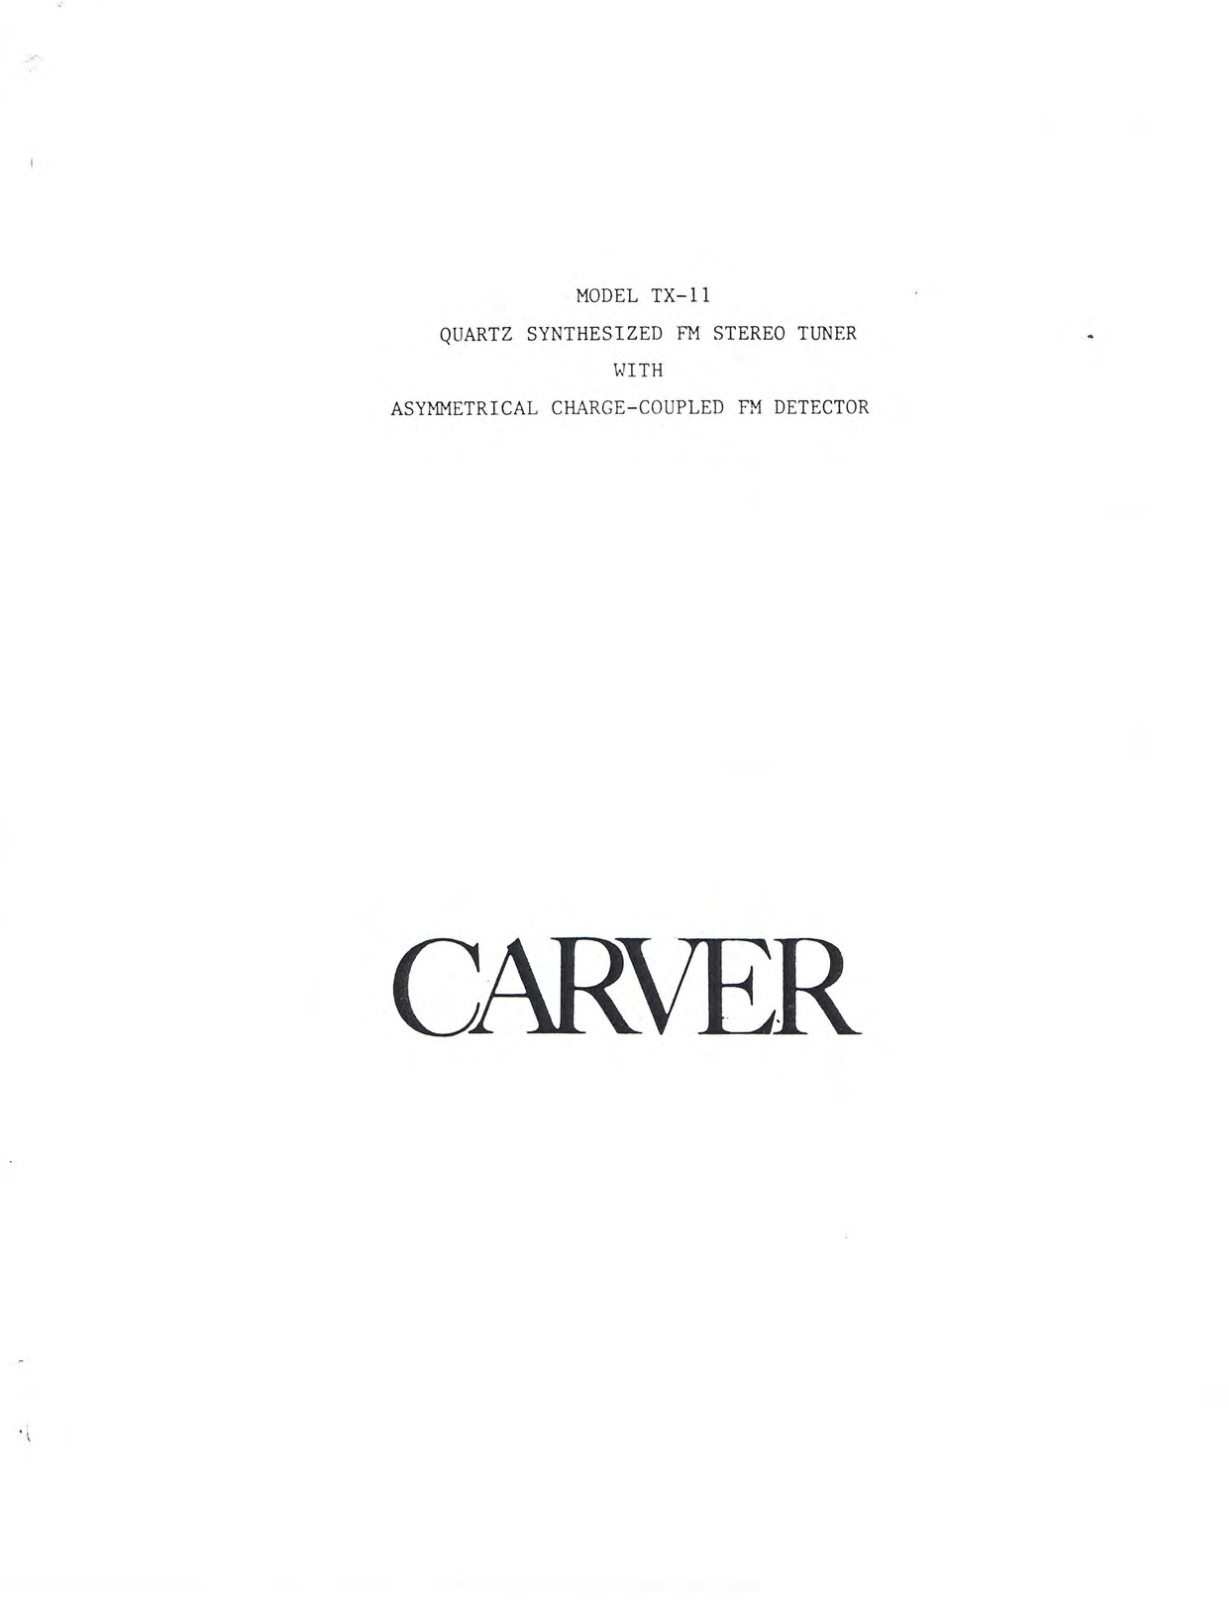 Carver TX-11 Owners manual